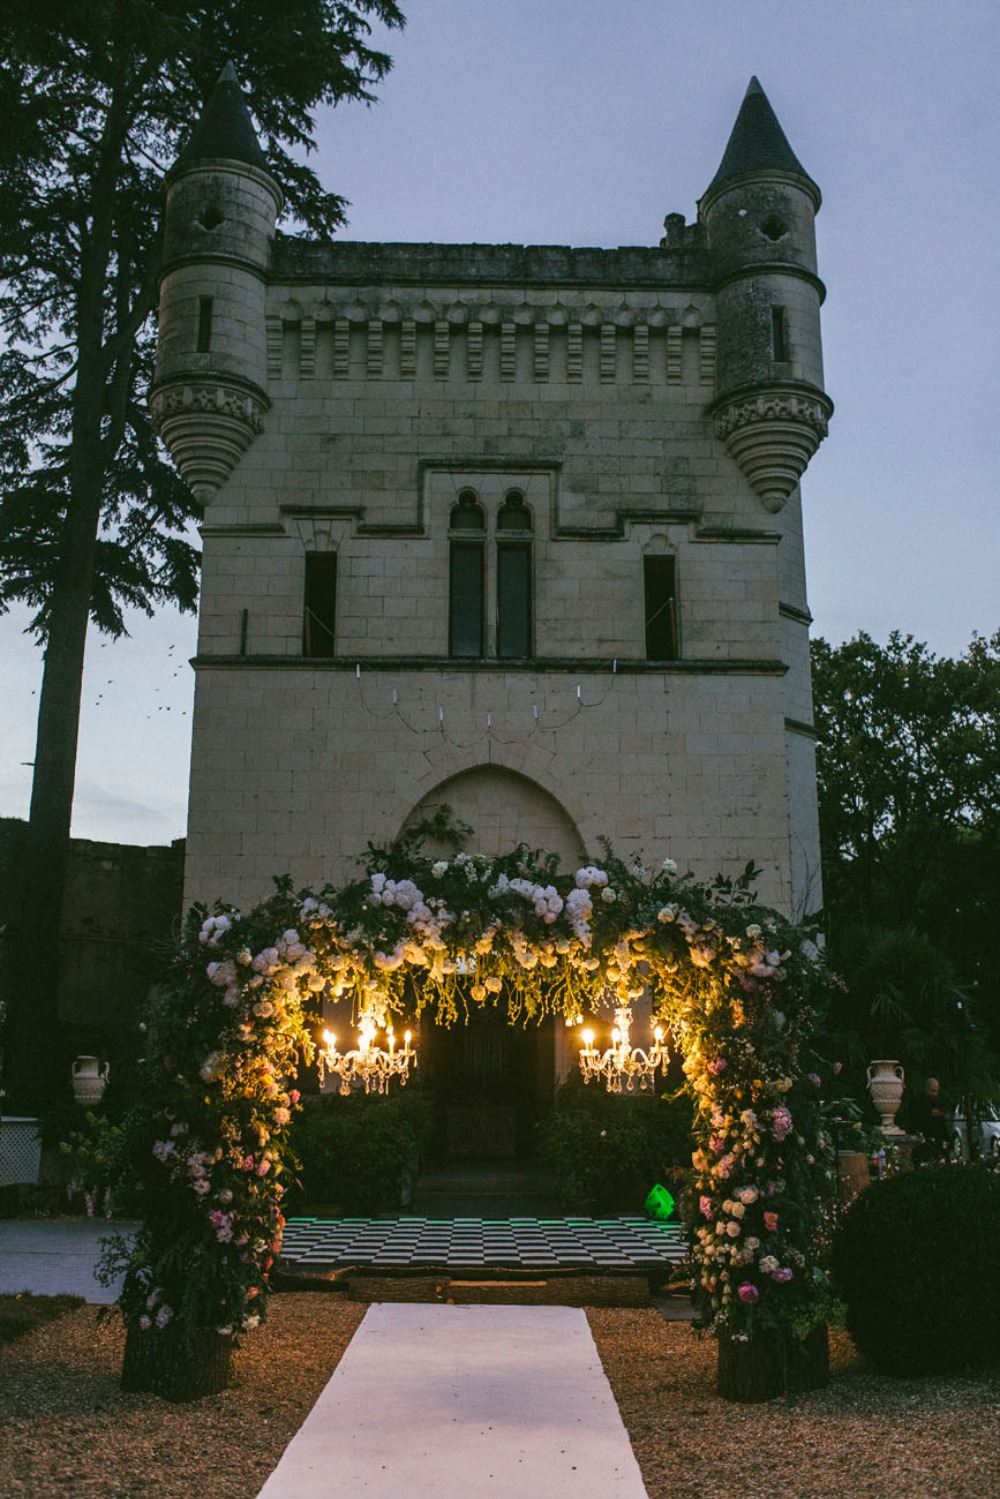 Dreamy castle wedding